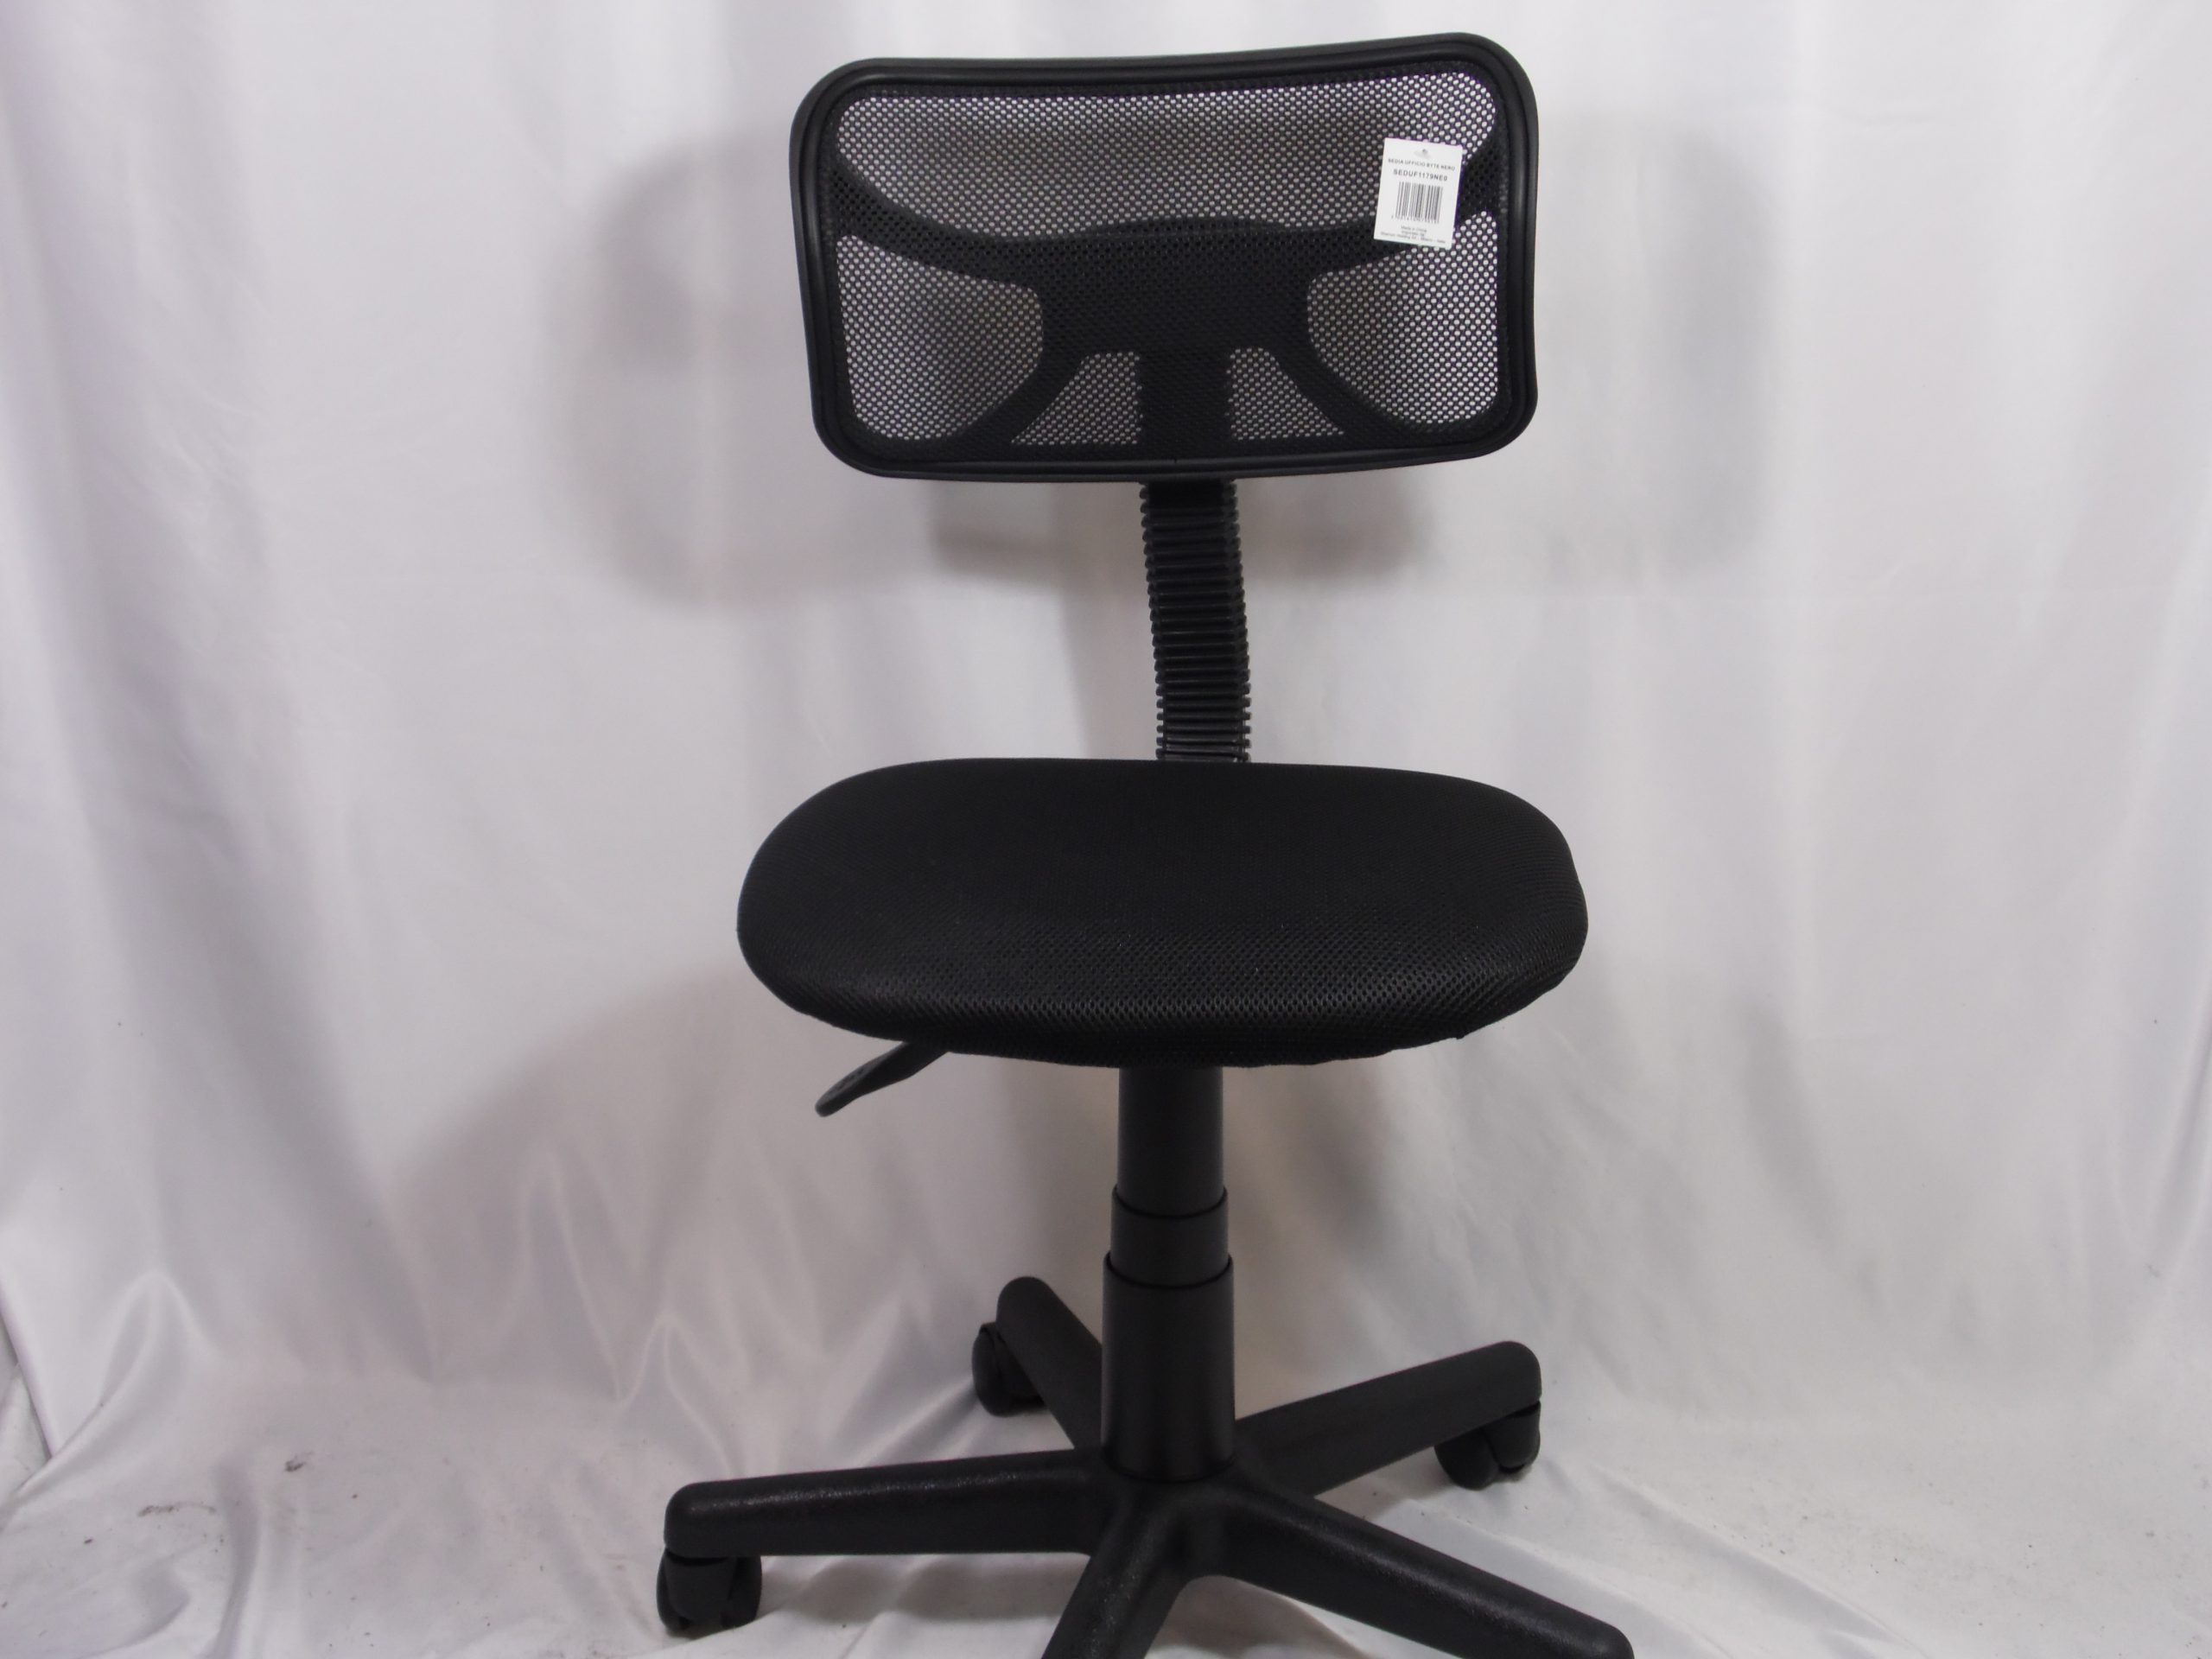 sedie per pc dimensioni: h max 83cm x d 55cm, h sedile 45cm x d sedile 44cm; Materiale: plastica e tessuto color nero